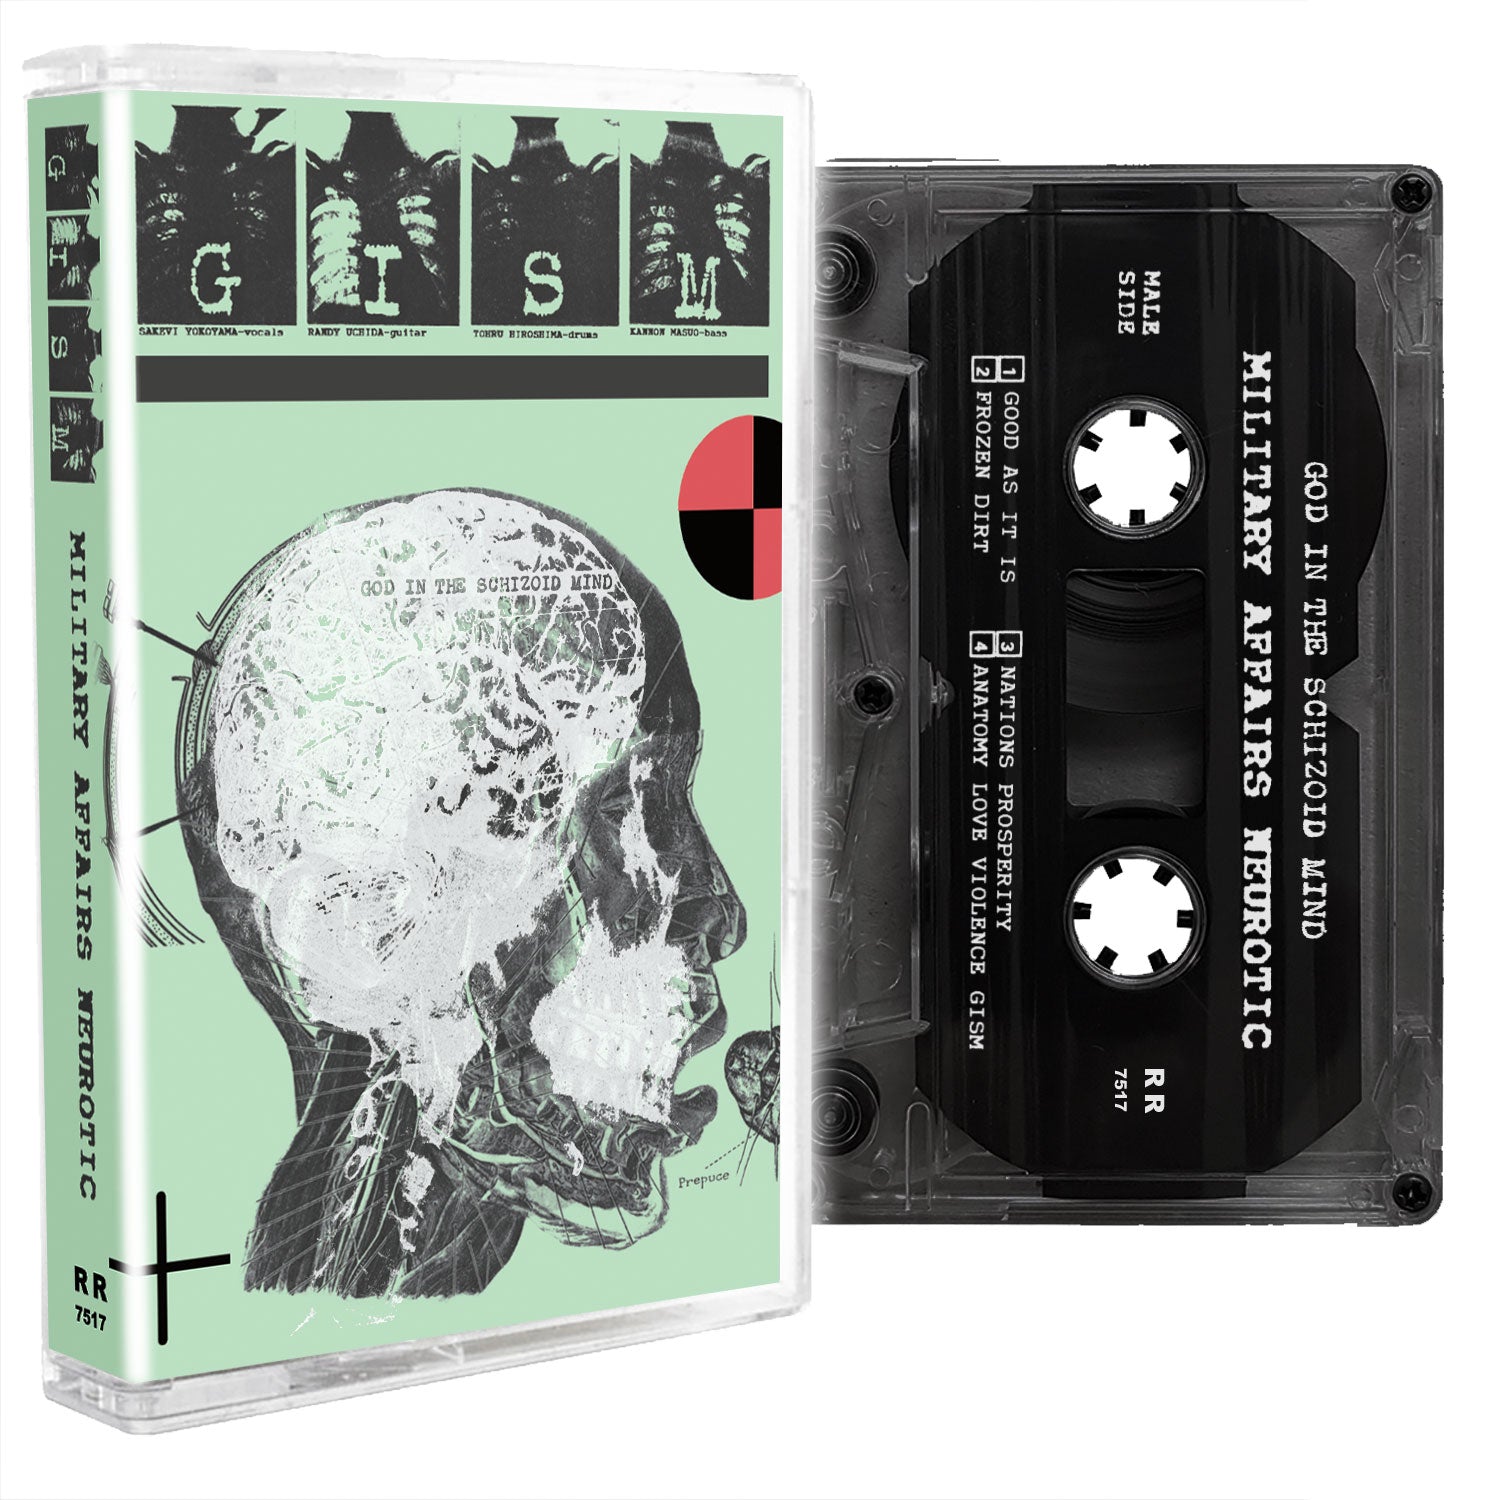 GISM "Military Affairs Neurotic (Reissue)" Cassette